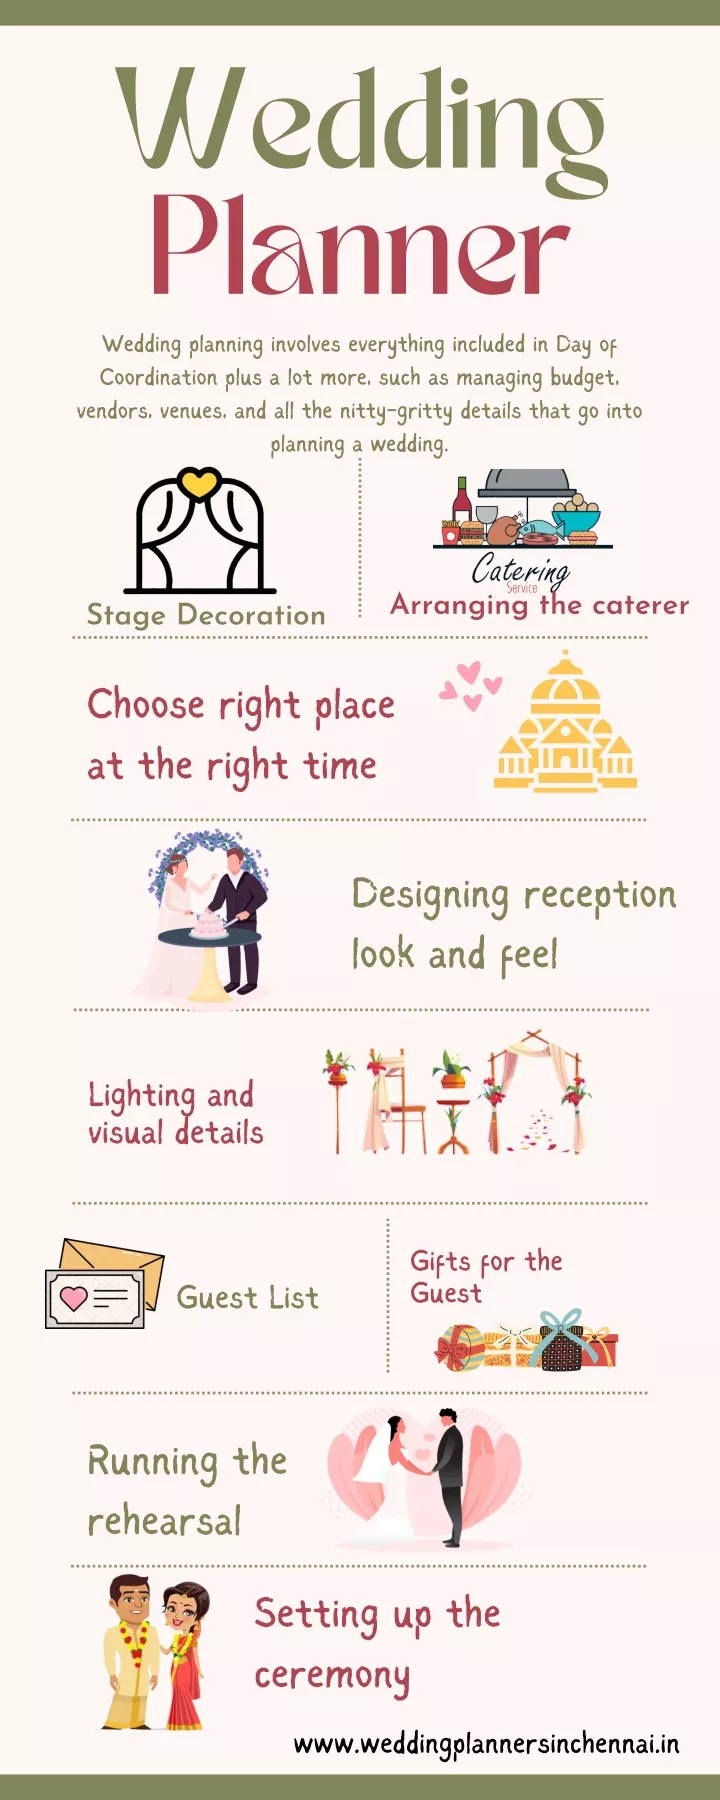 wedding planner wedding planning involves